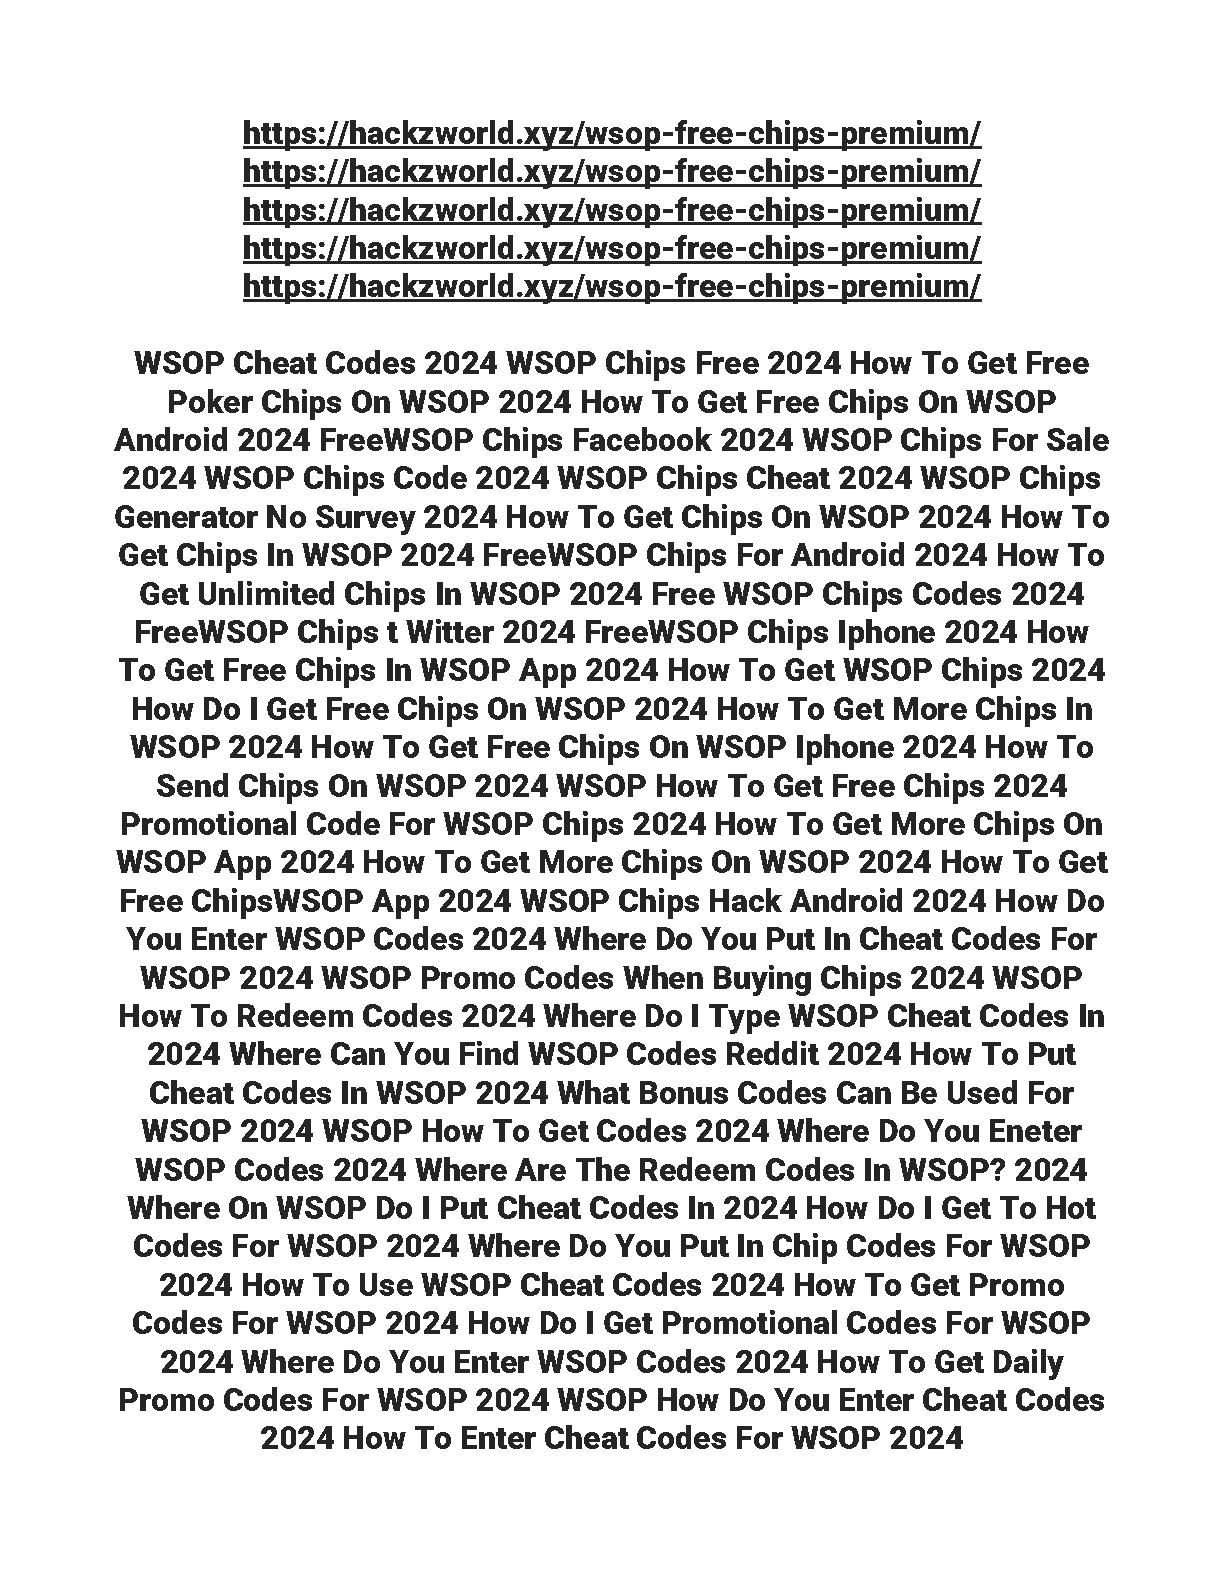 WSOP Chips Codes 2024.pdf PDF Host